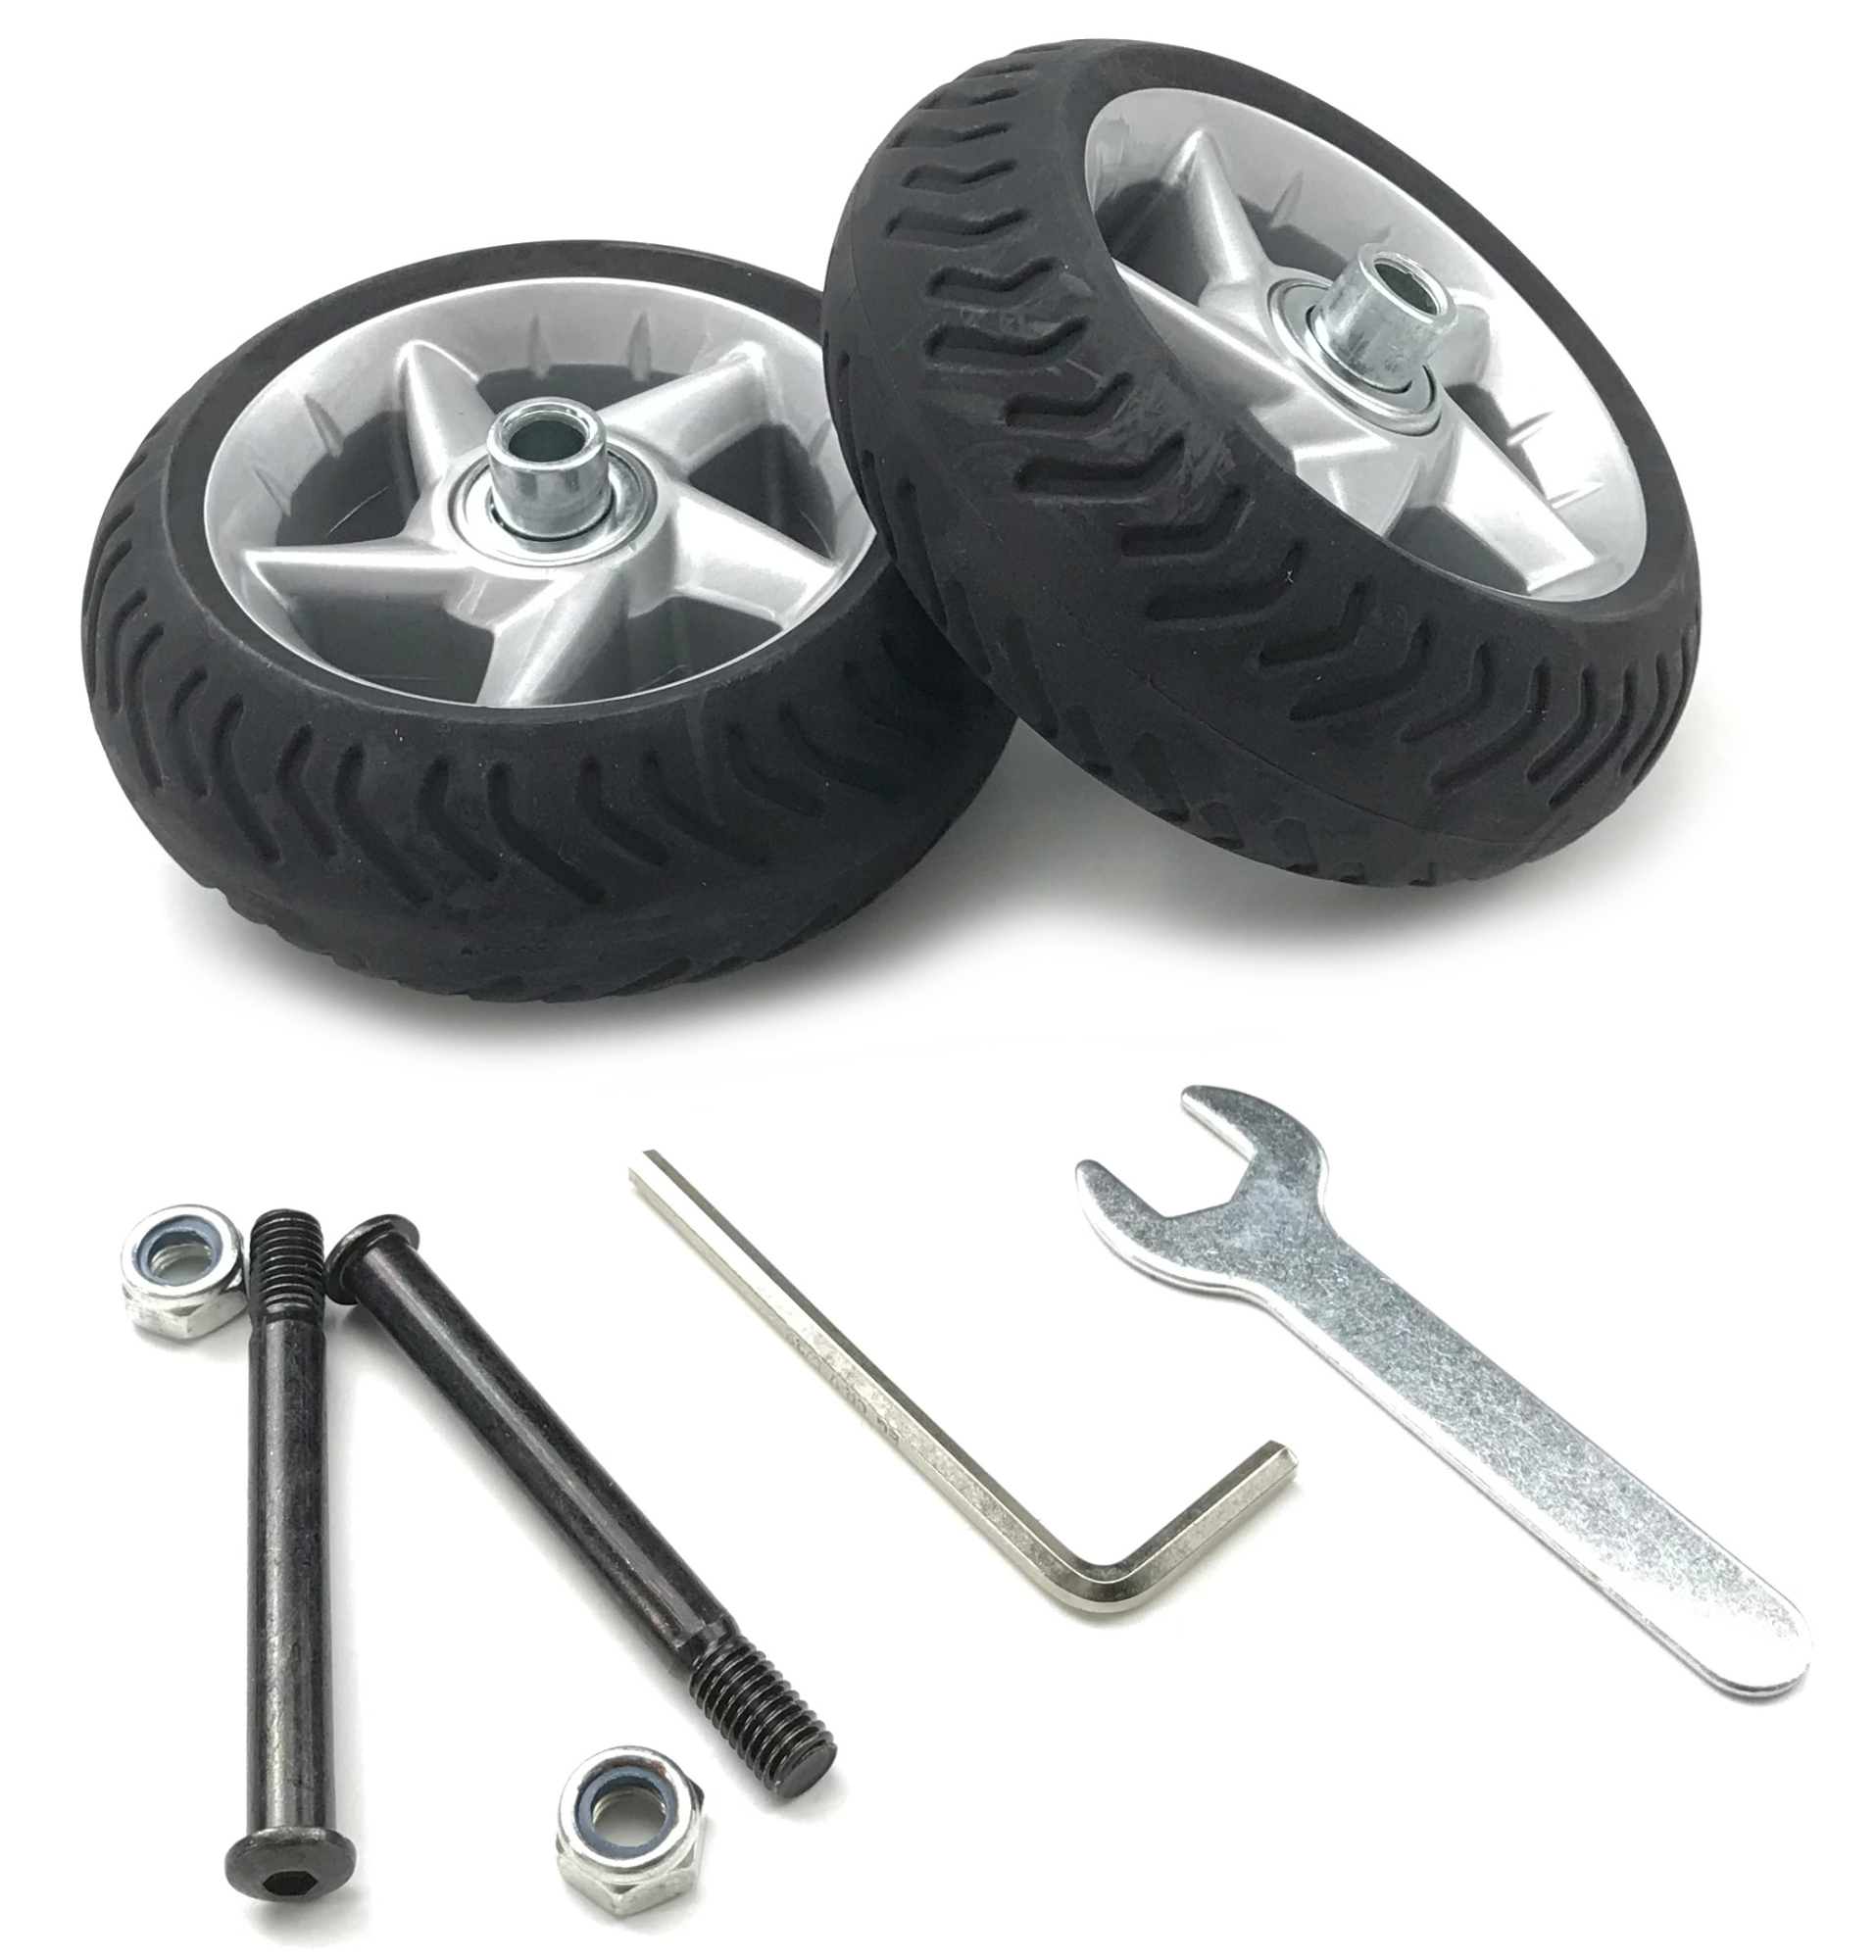 OGIO Rig 9800 Pro Gear Bag Wheel Kit | eBay